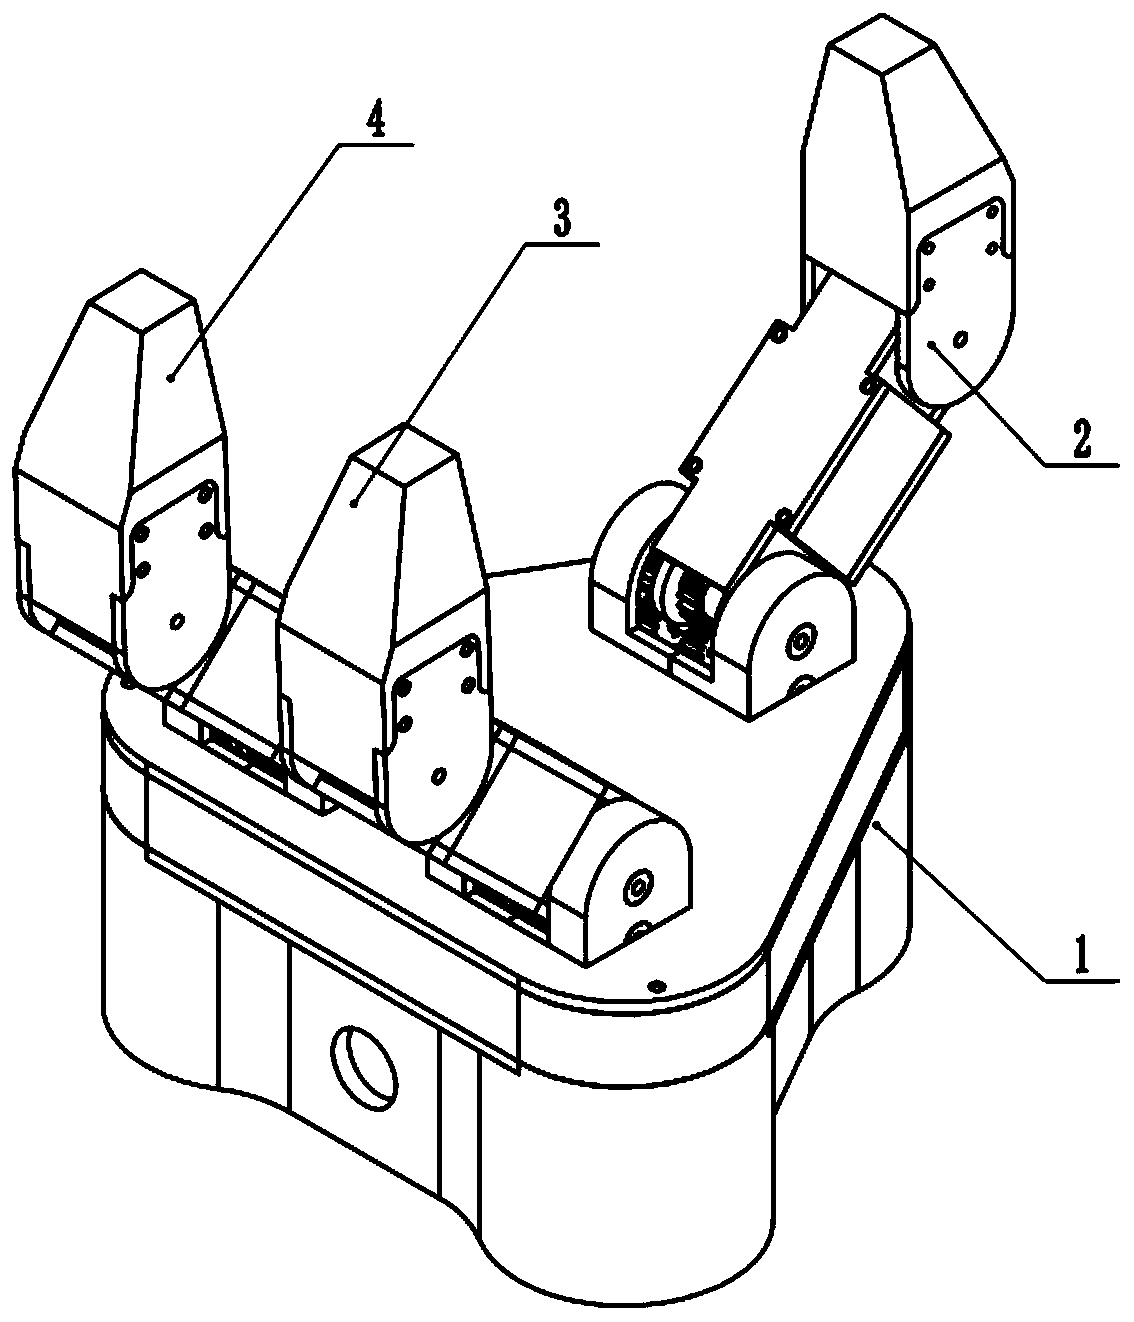 Horizontal clamping self-adaptive three-finger underactuated robot hand